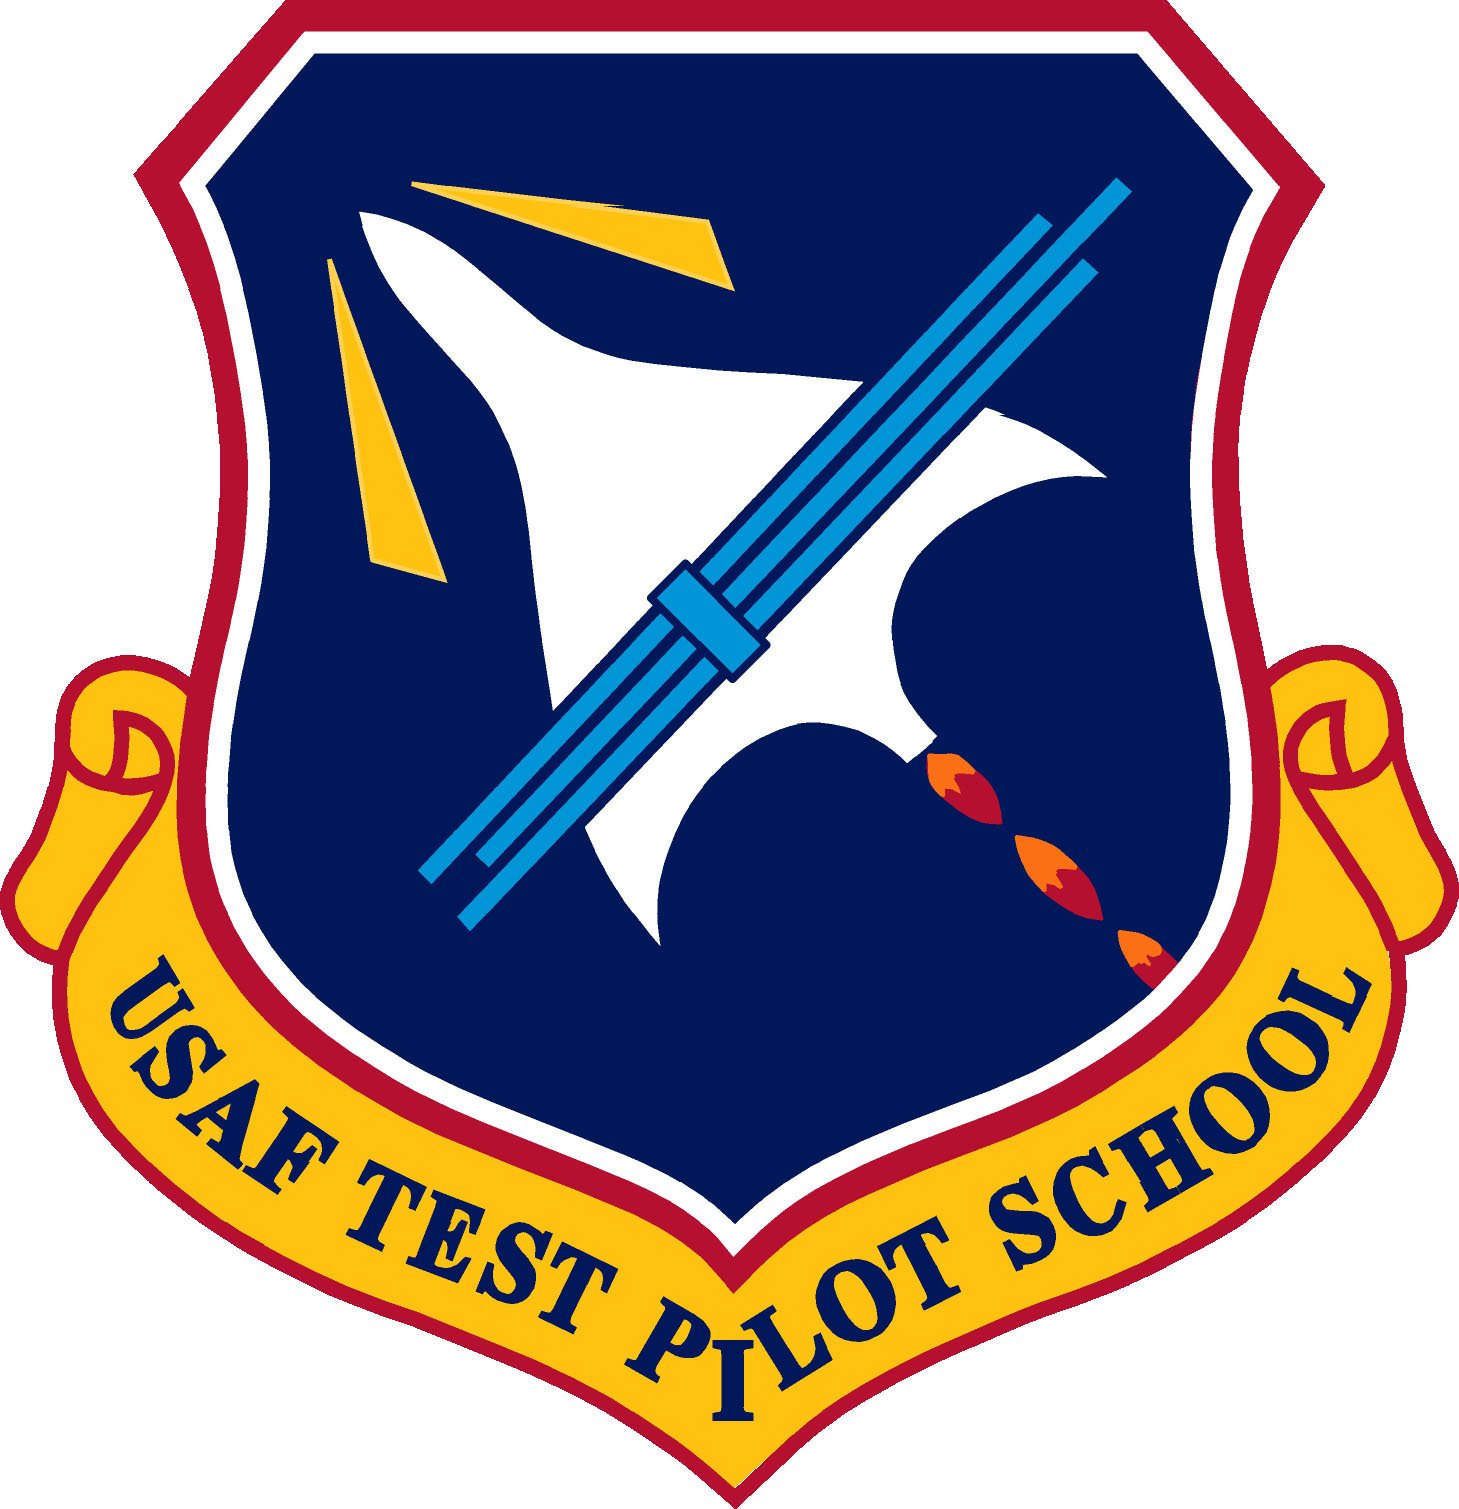 USAFTPS logo